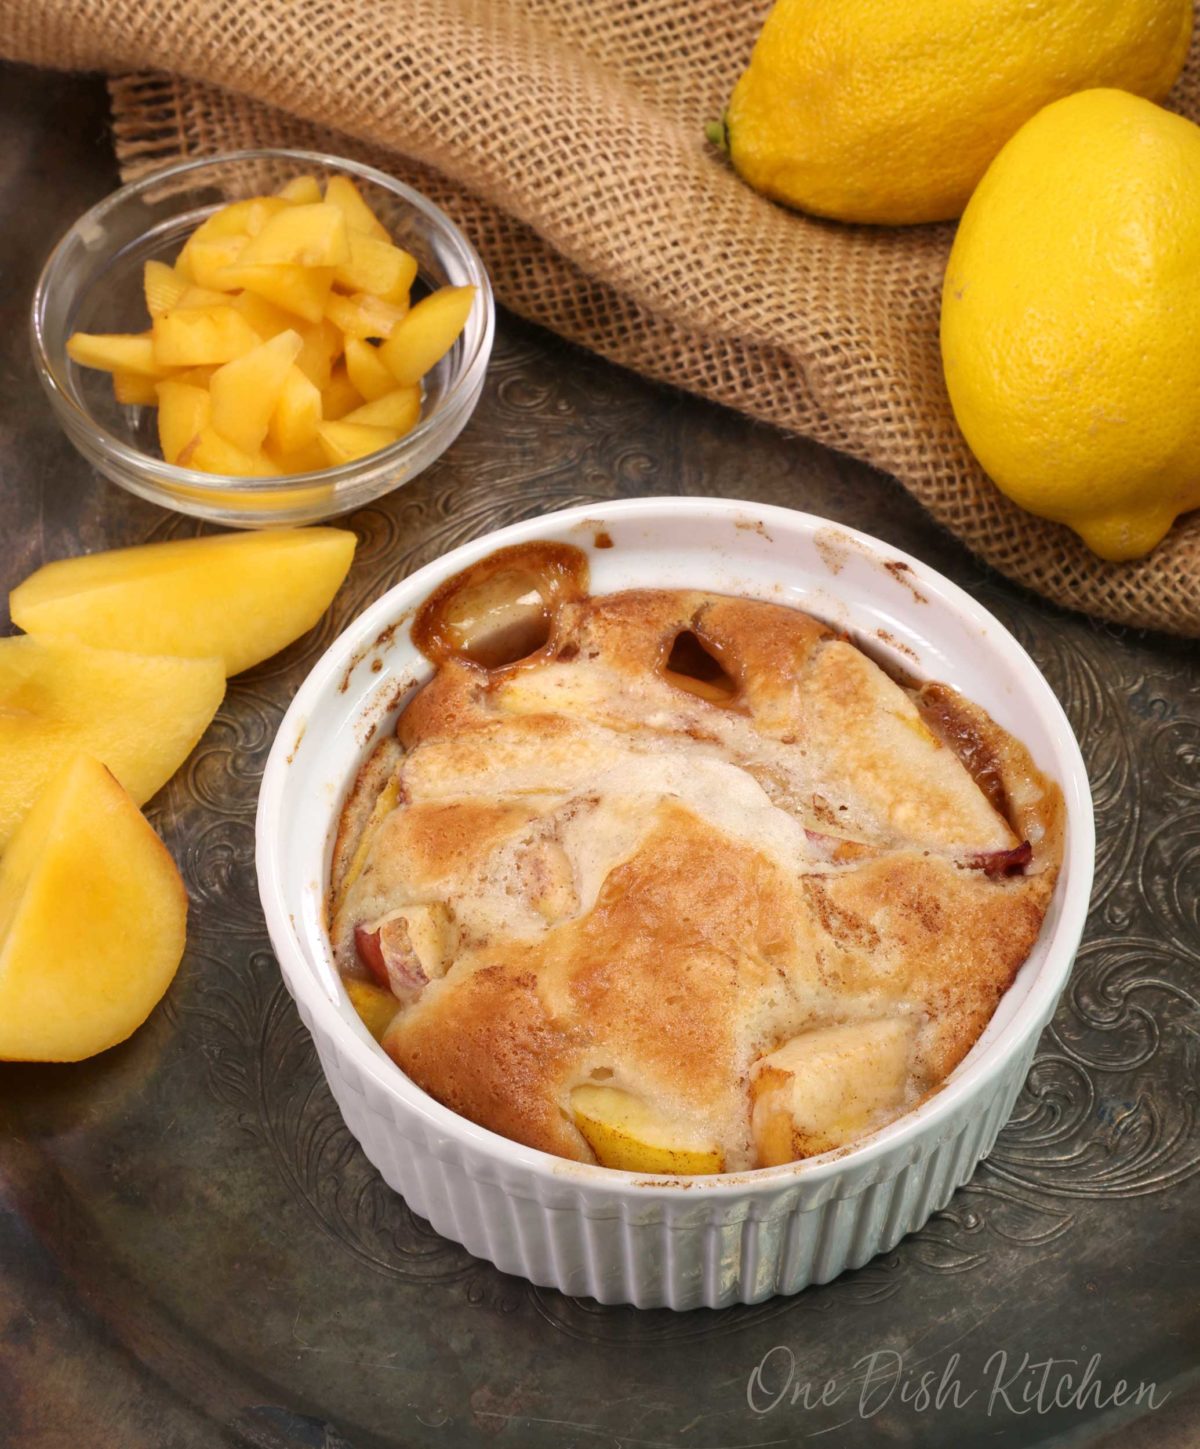 a mini peach cobbler in a small white ramekin on a silver tray next to lemons and fresh peaches.